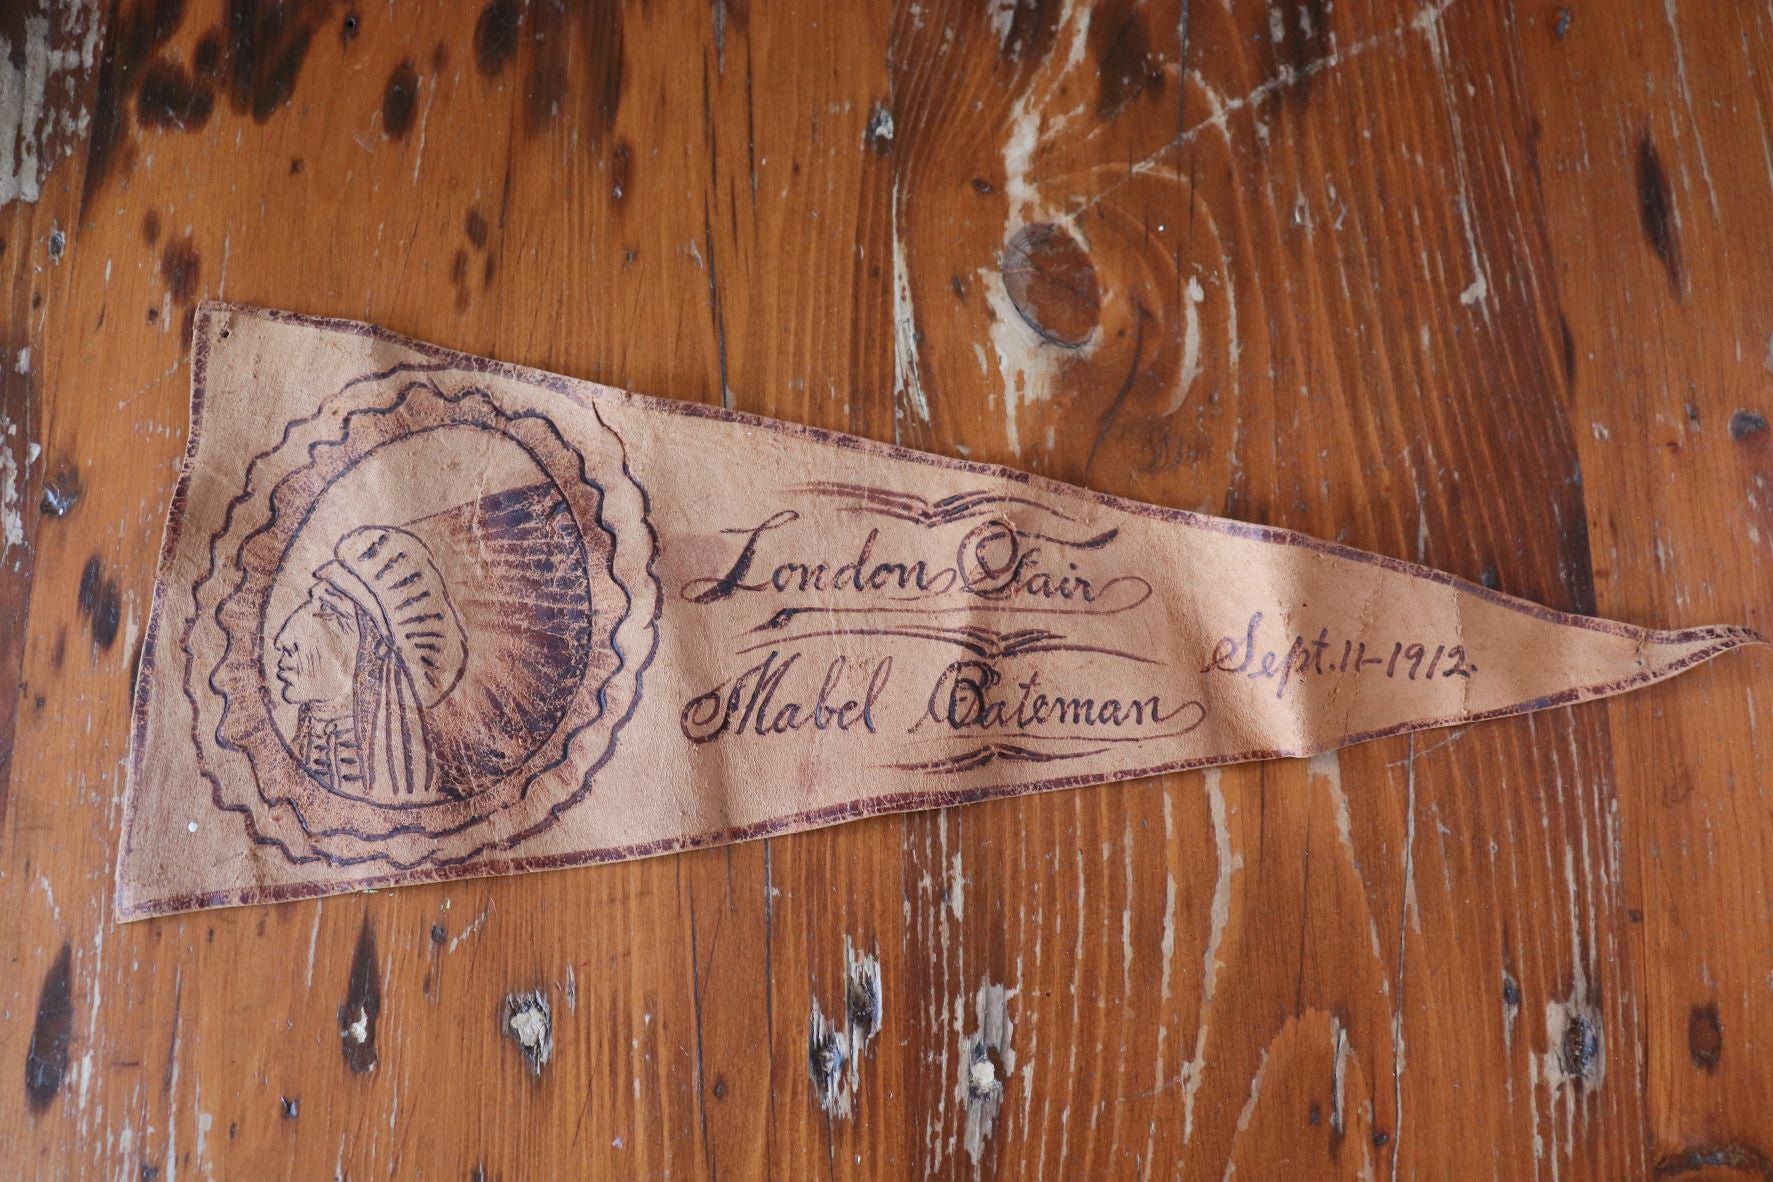 Old Leather Pennant - London Fair Mabel Bateman, Sept 11, 1912